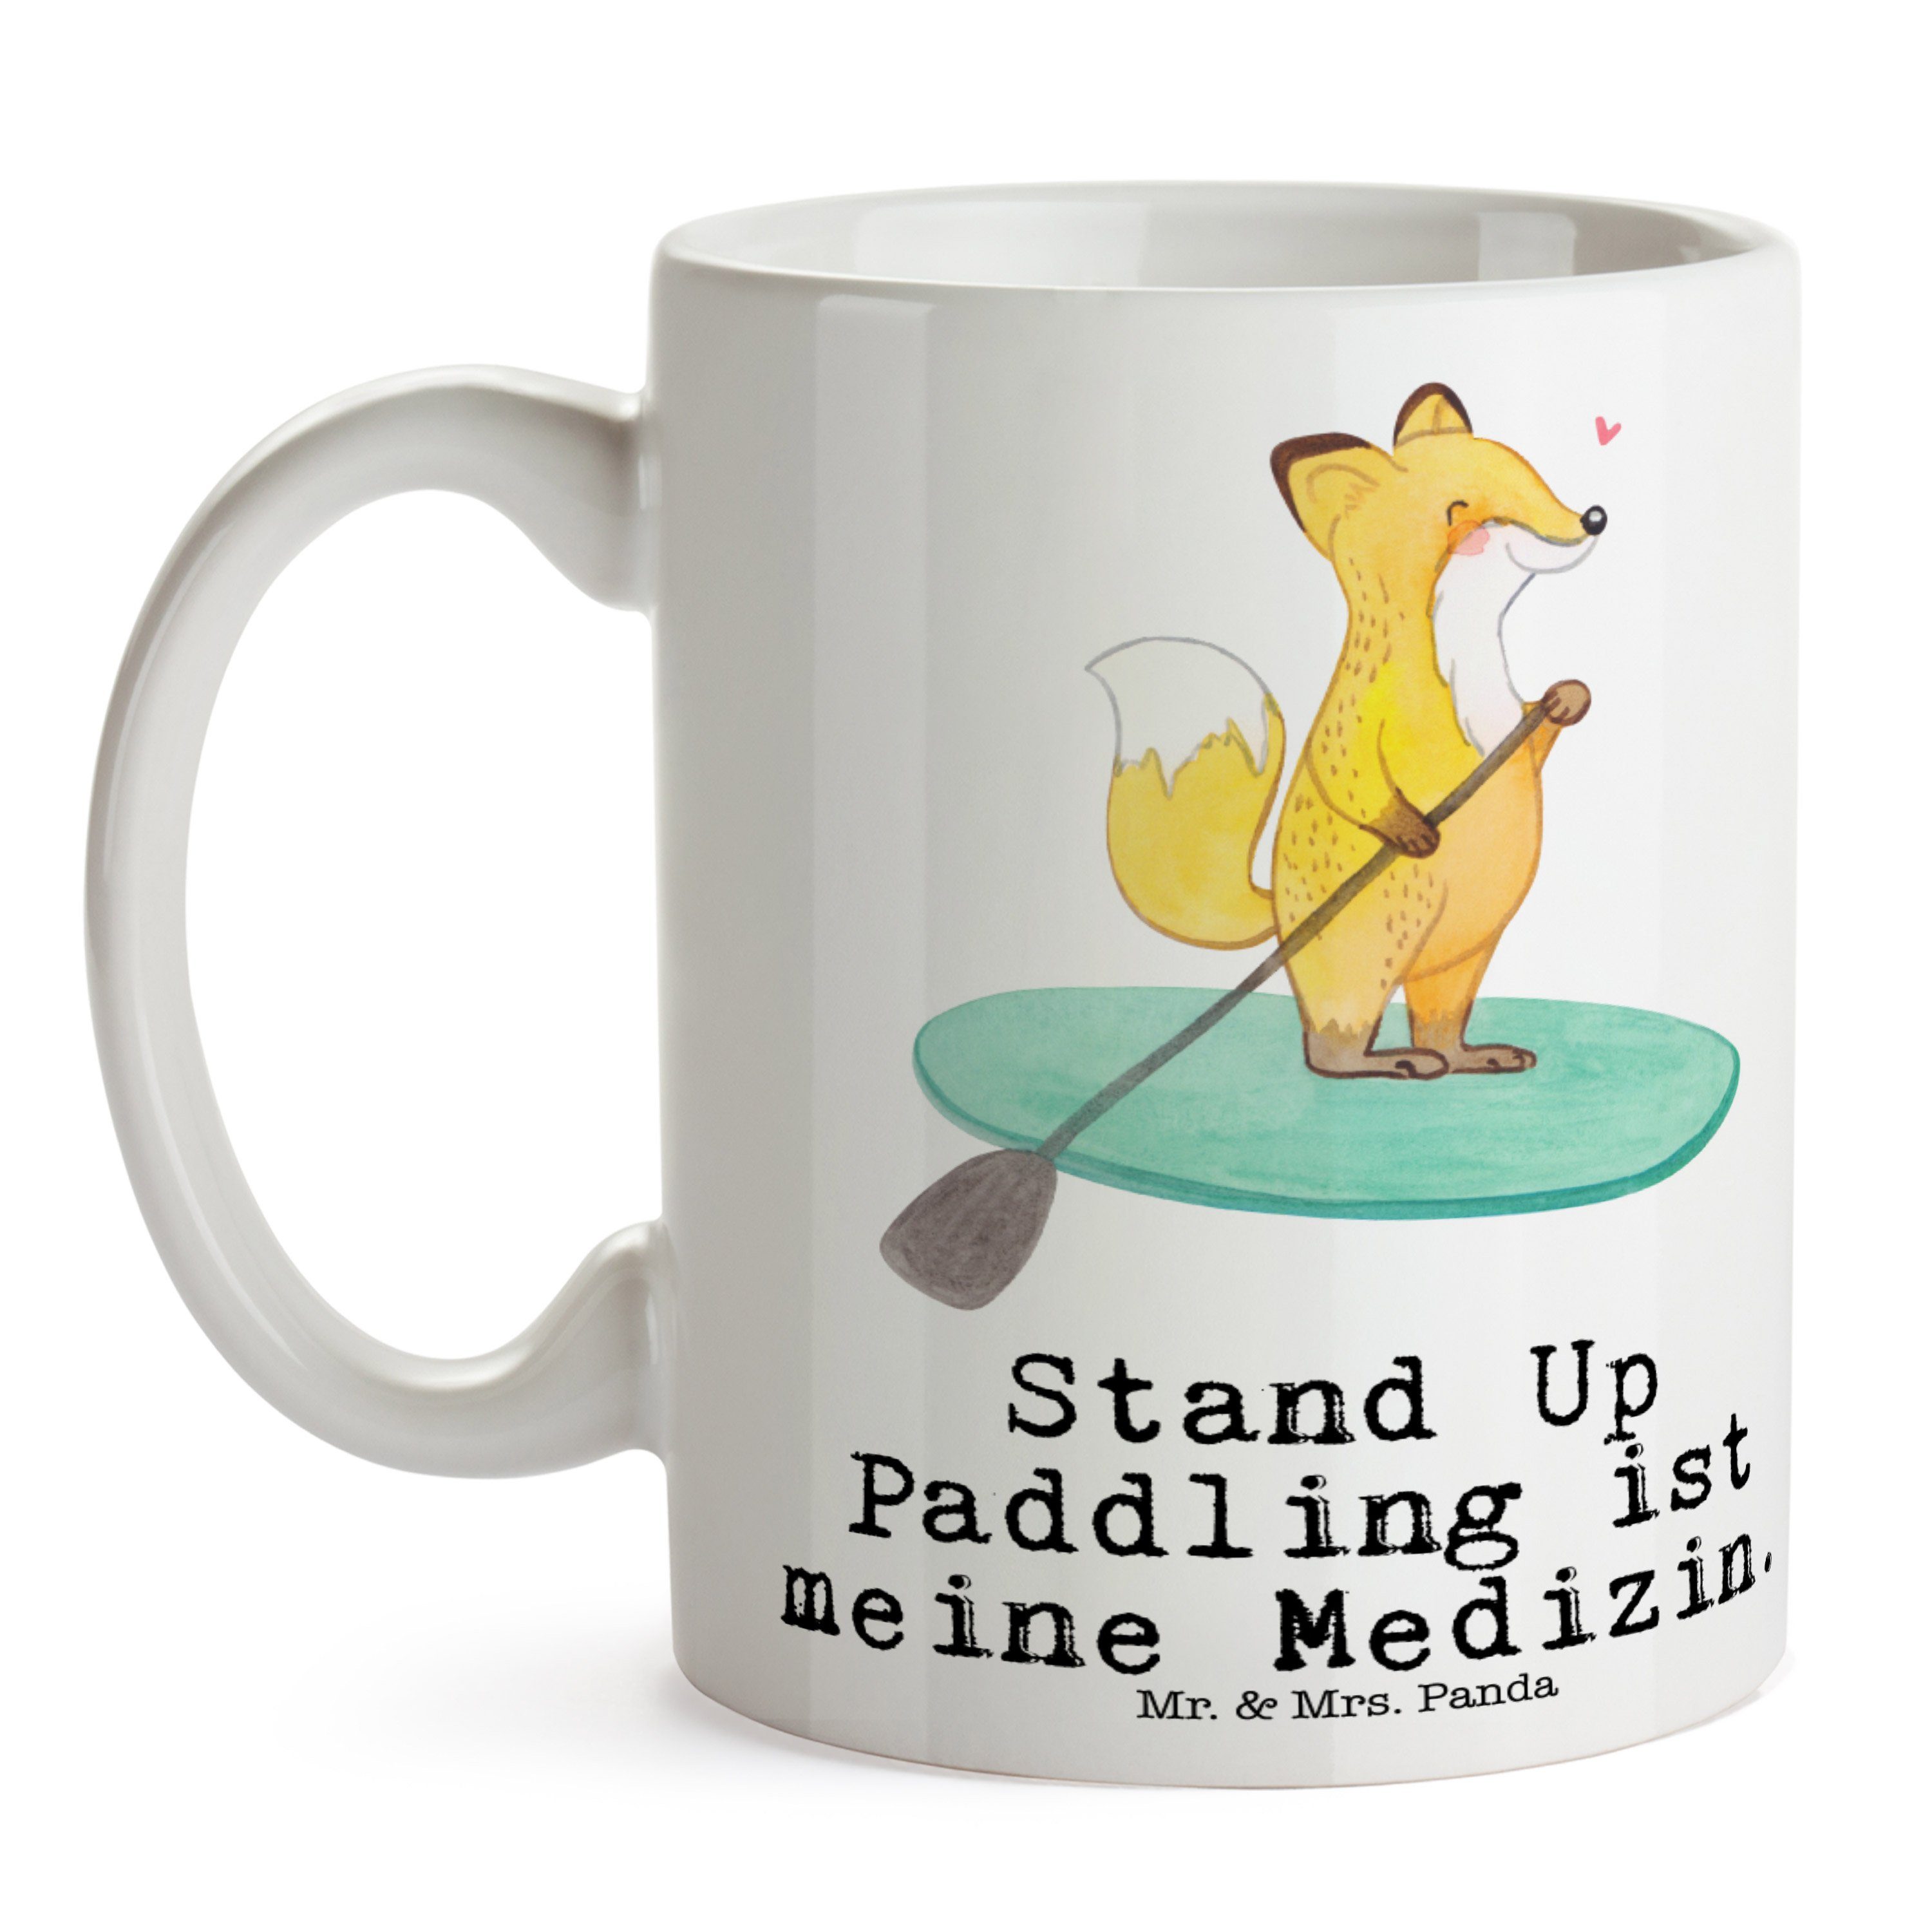 Paddle - Stand Keramik Paddling Tasse Mrs. Weiß Geschenk, & - Fuchs Medizin Panda B, Mr. Up Boarding,